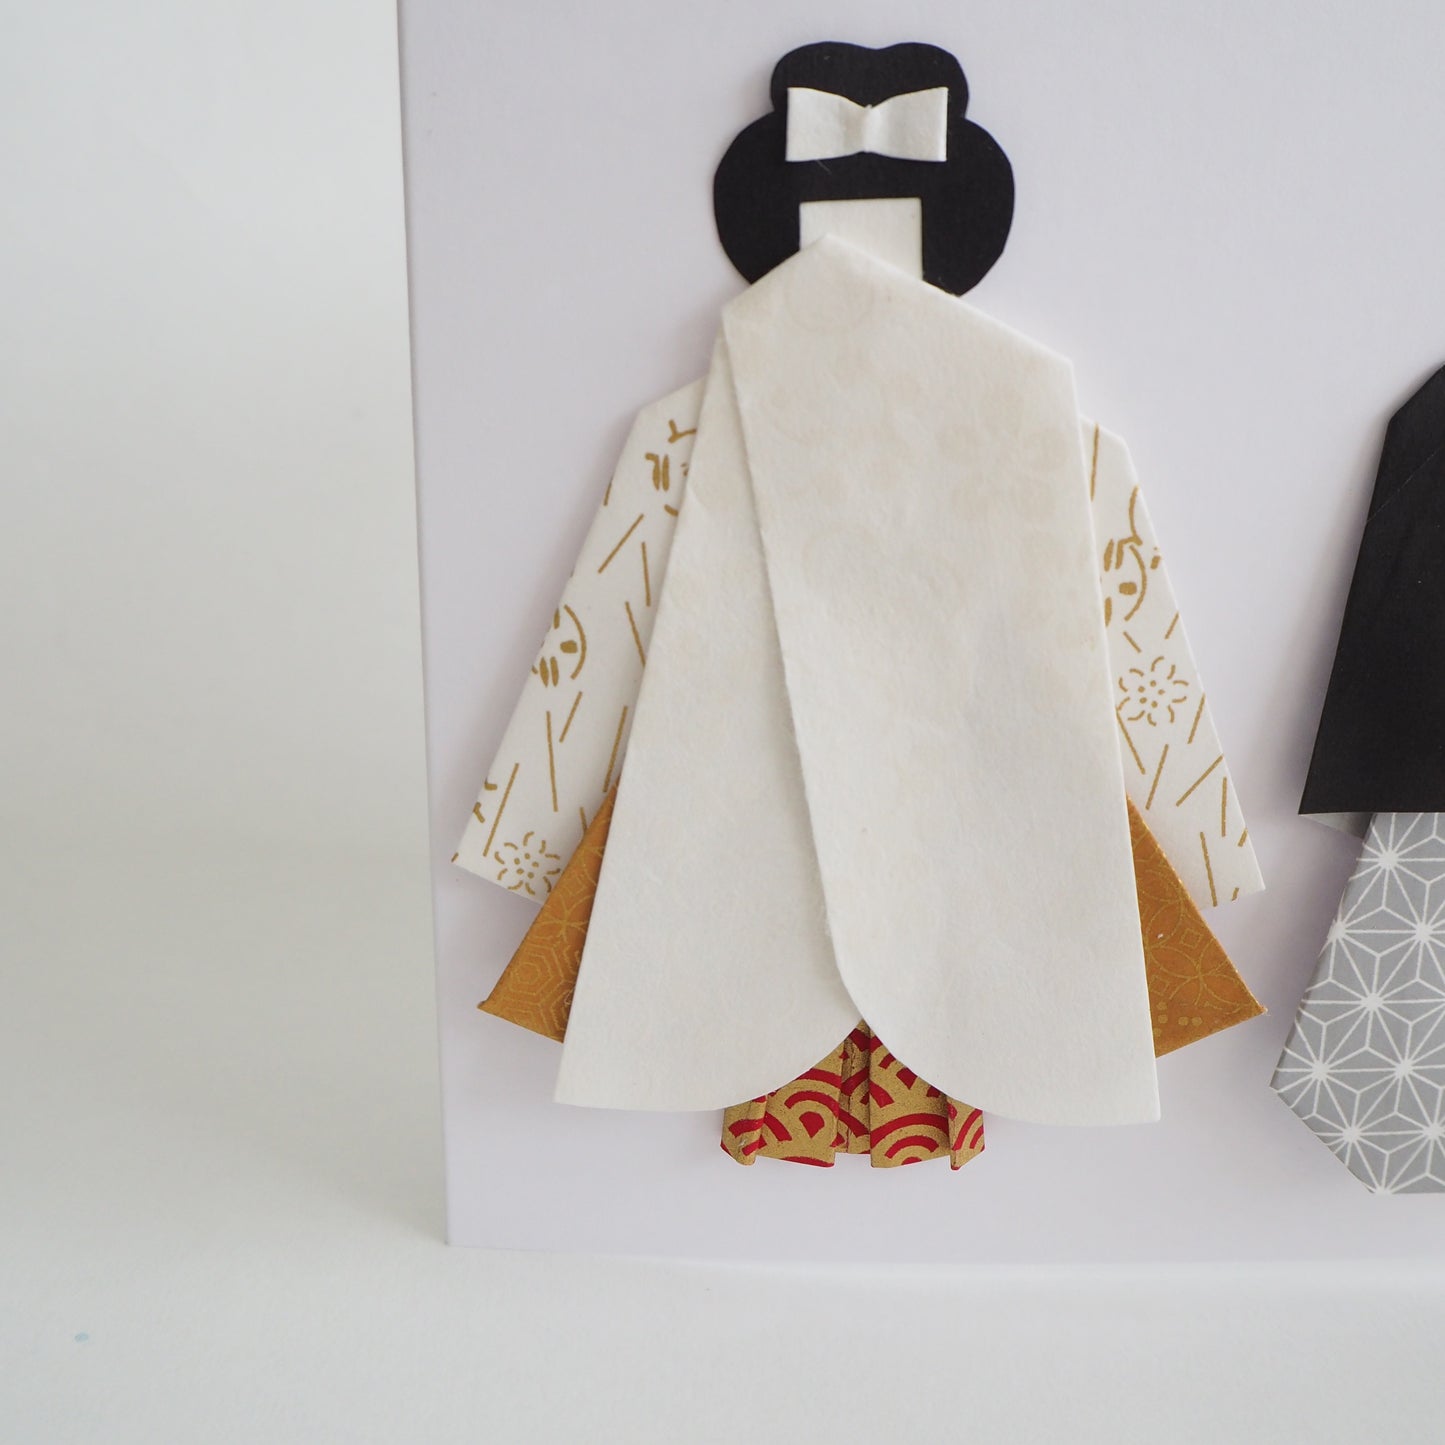 Customisable Handmade Origami Wedding Card - Traditional